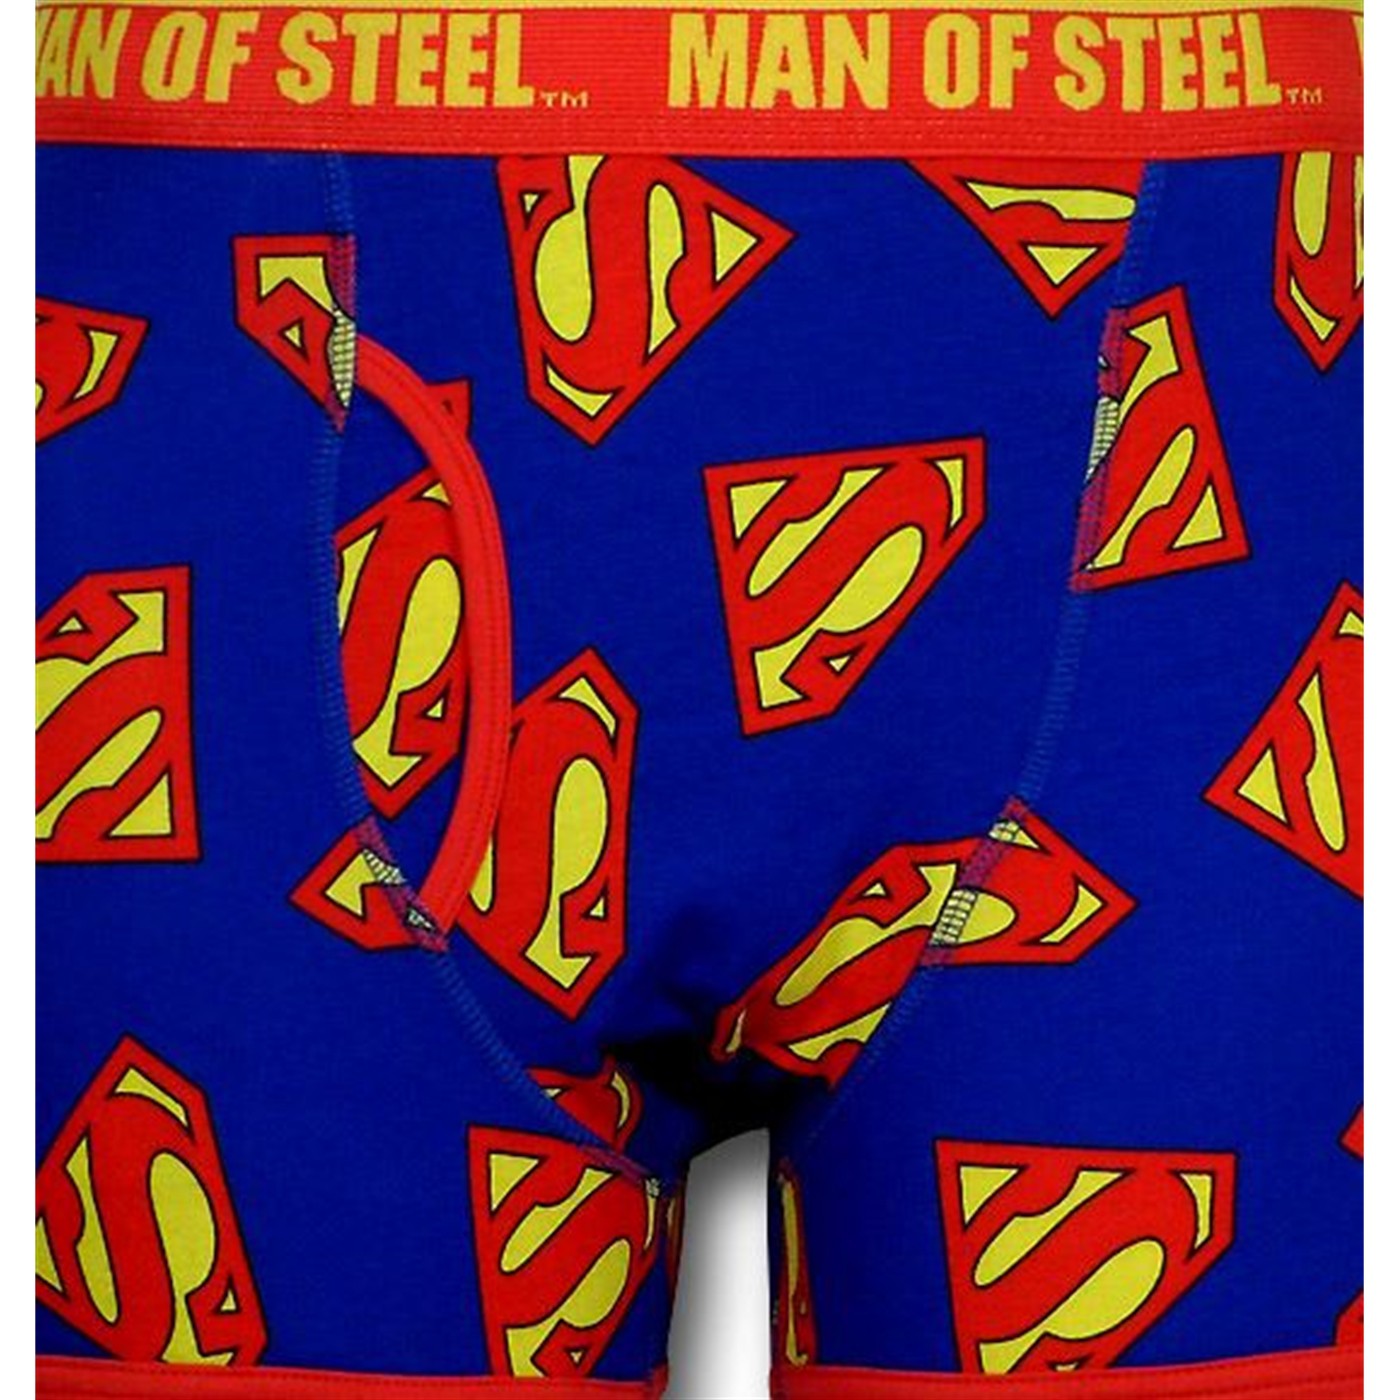 Superman Multi Symbol Boxer Briefs